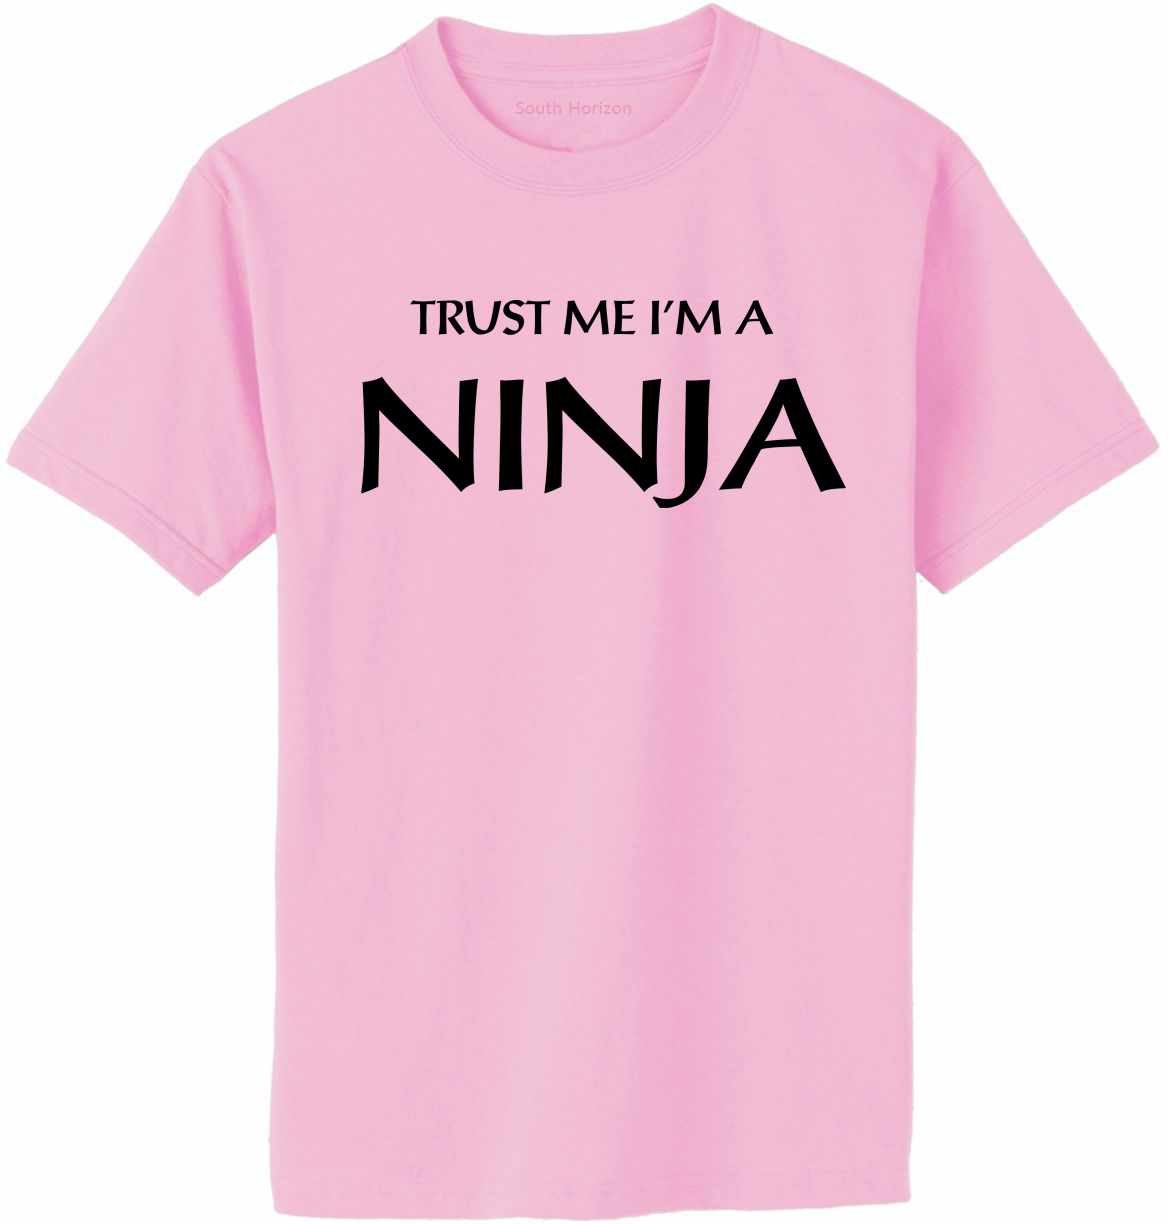 Trust Me I'm a NINJA Adult T-Shirt (#774-1)